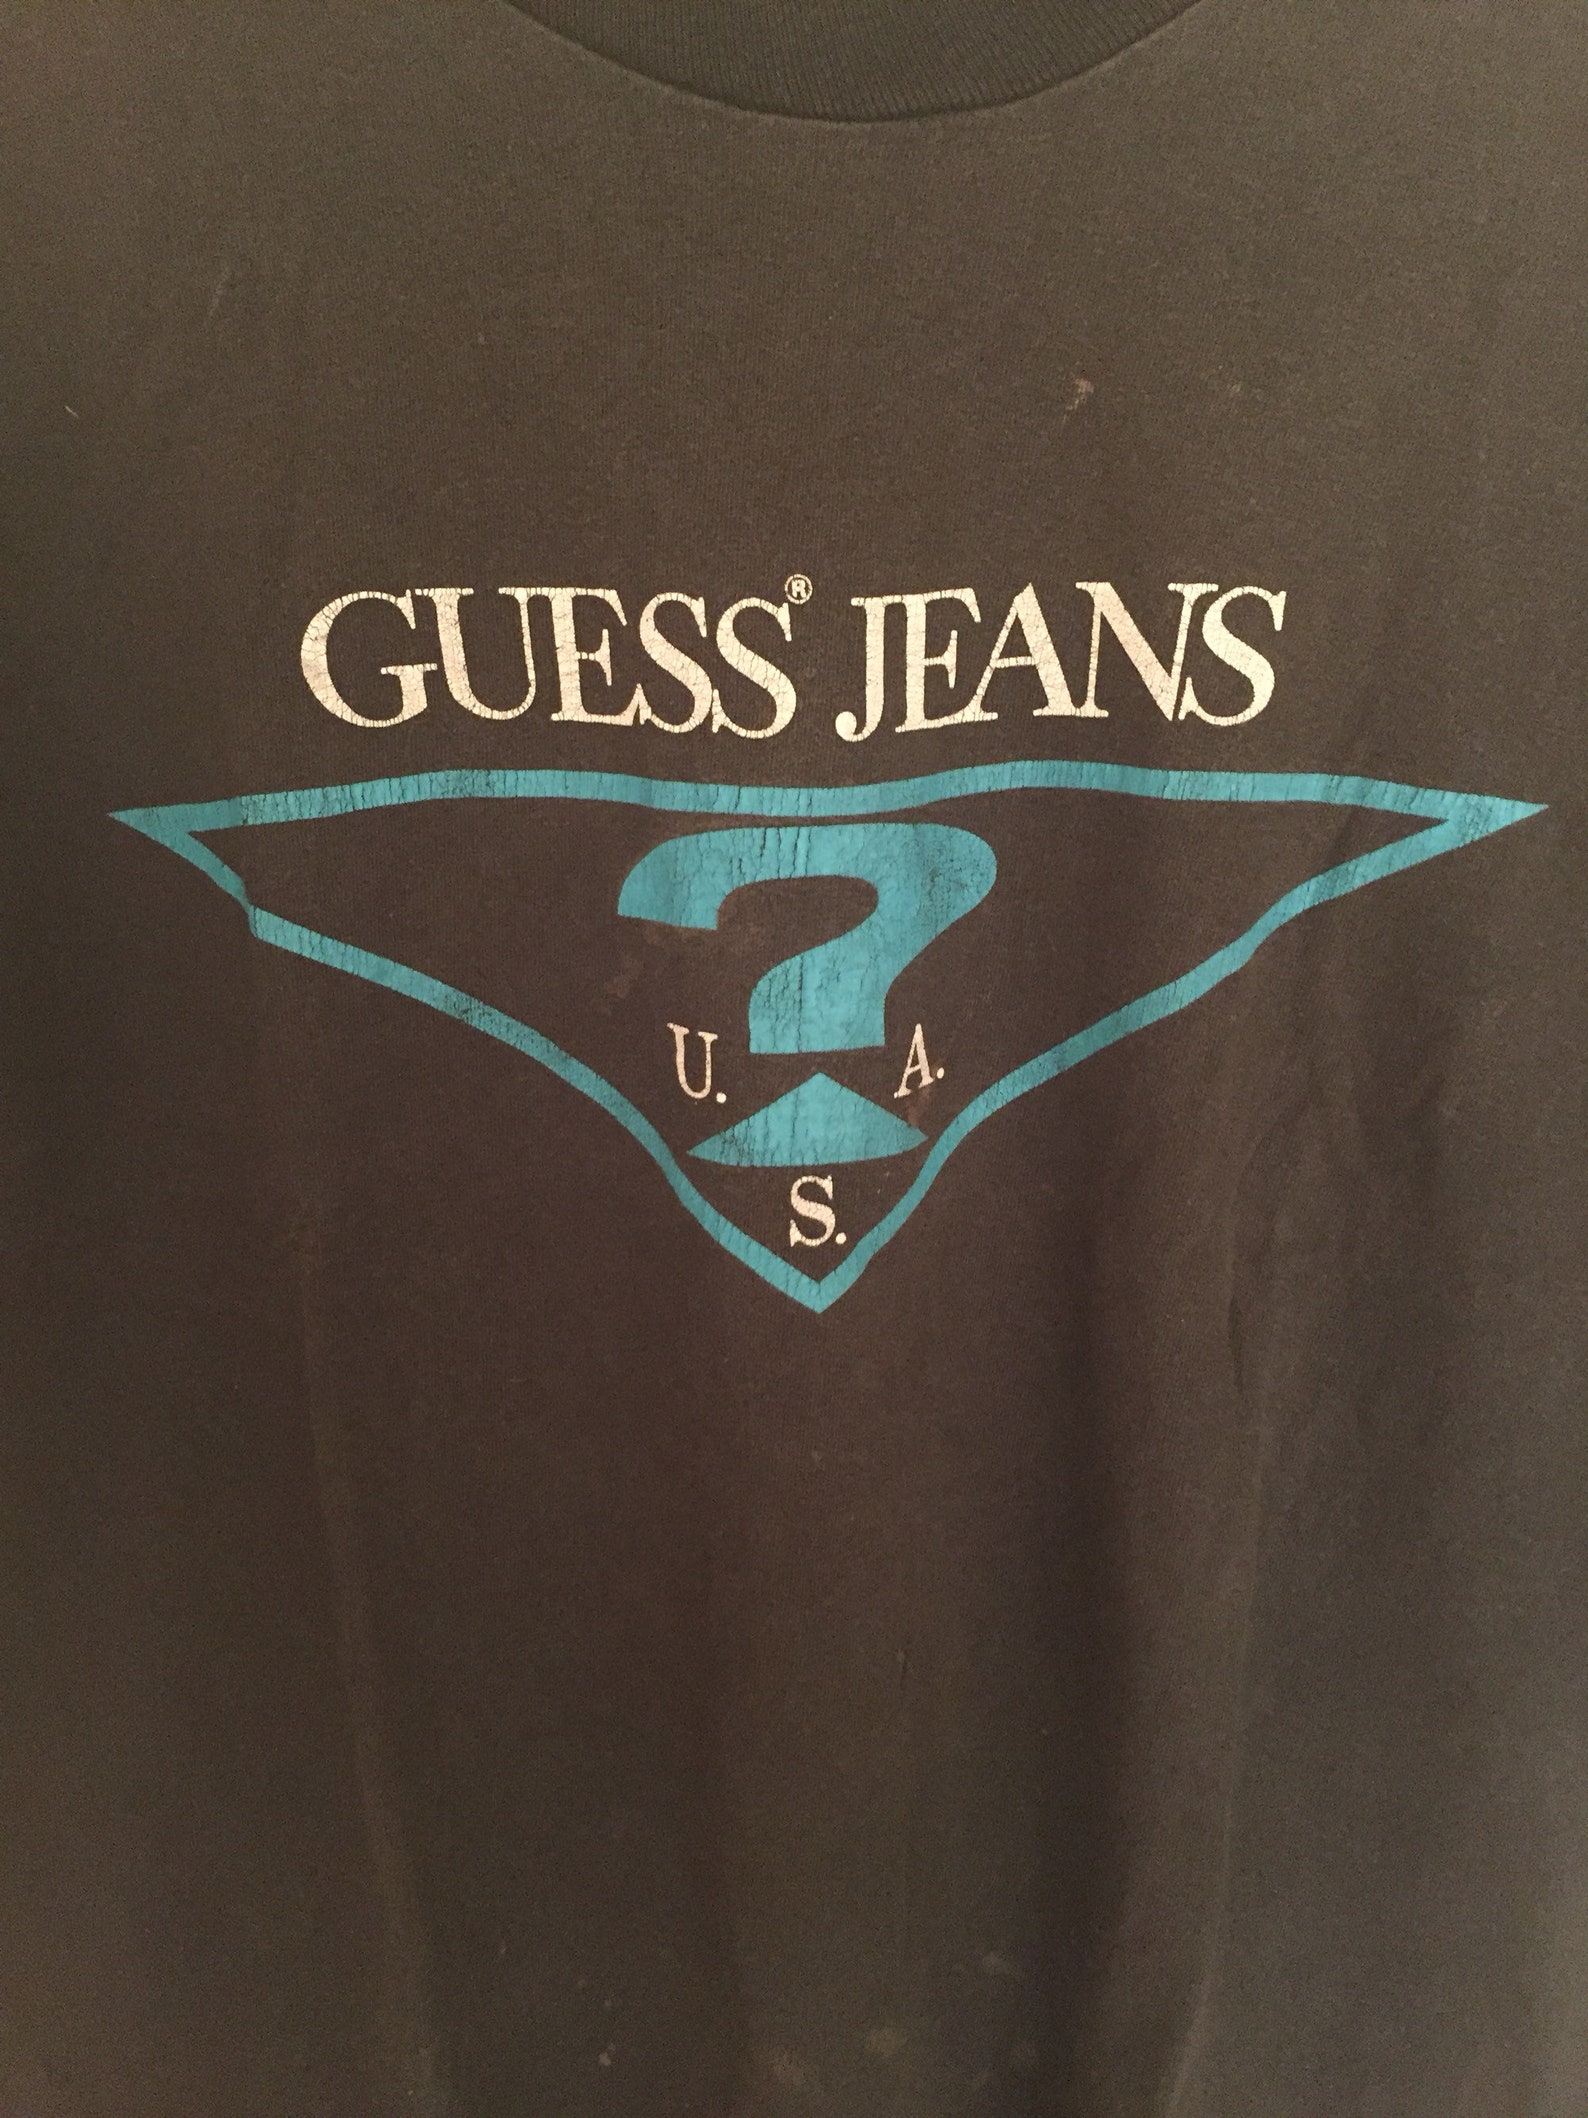 Guess Jeans USA rare vintage tshirt | Etsy